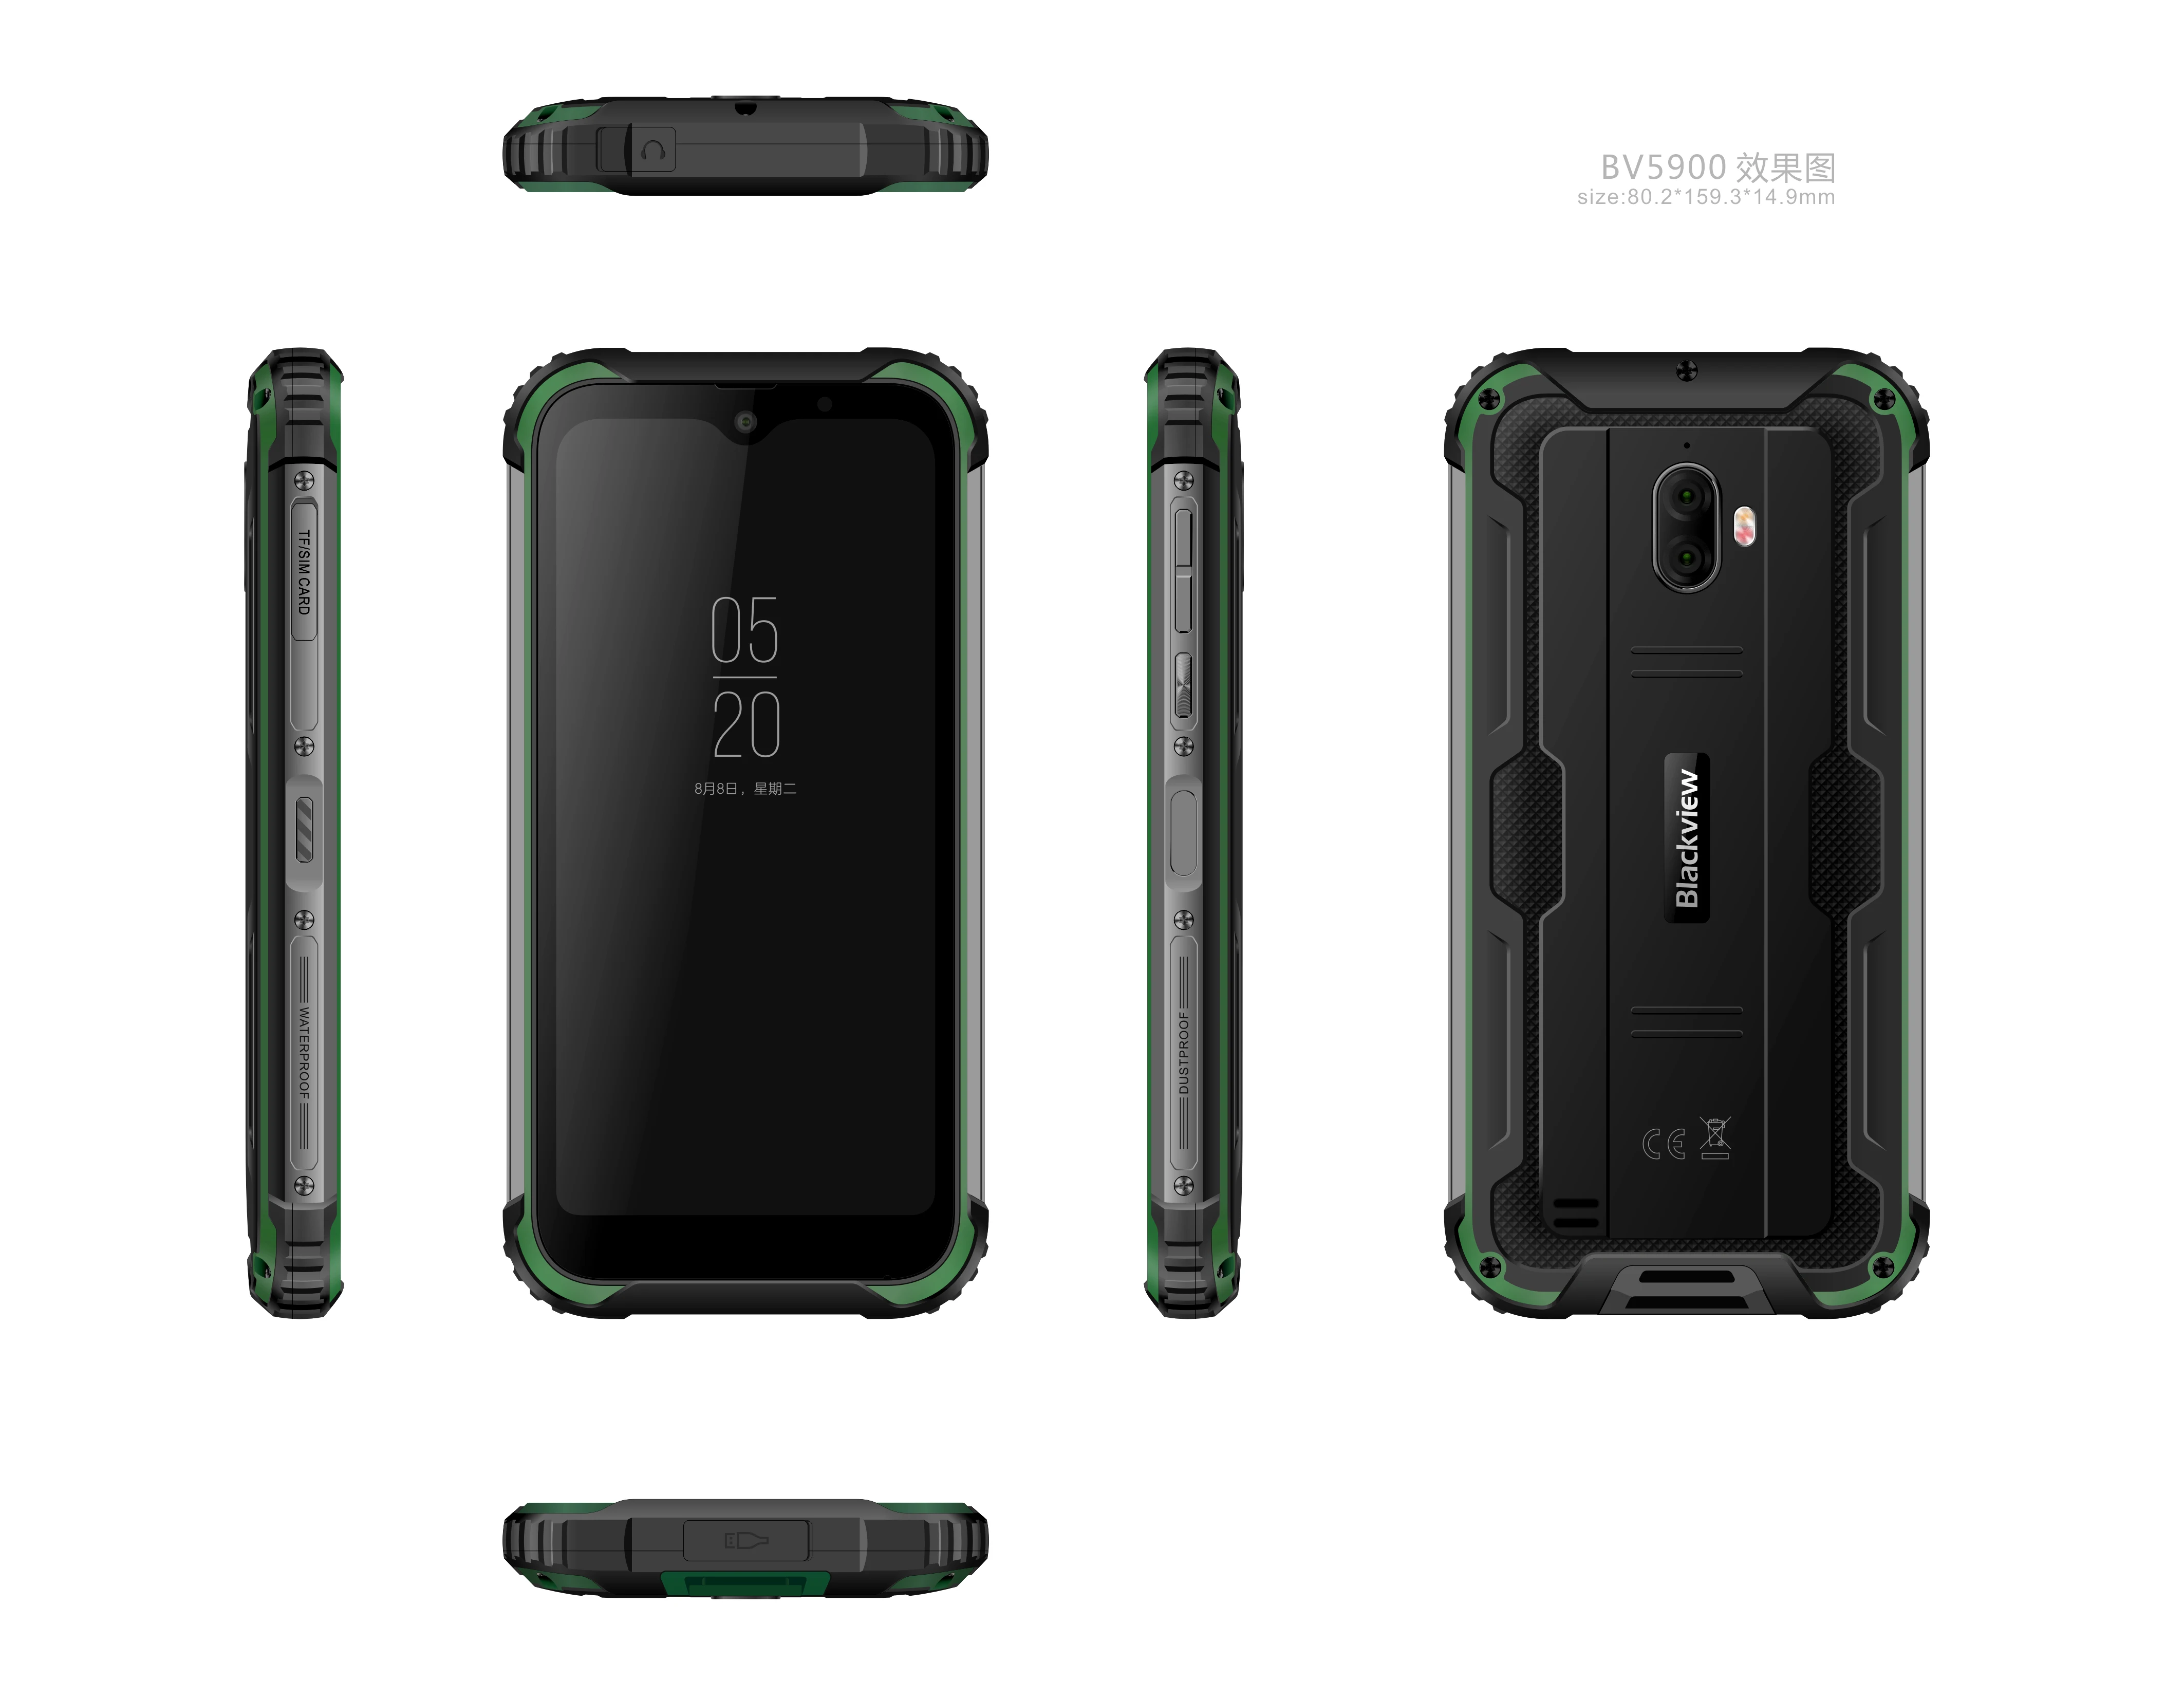 Blackview BV5900 5580mAh IP68/IP69K waterproof shockproof Mobile Phone 3GB 32GB 5.7" Android 9.0 Quad core  4G Rugged Smartphone